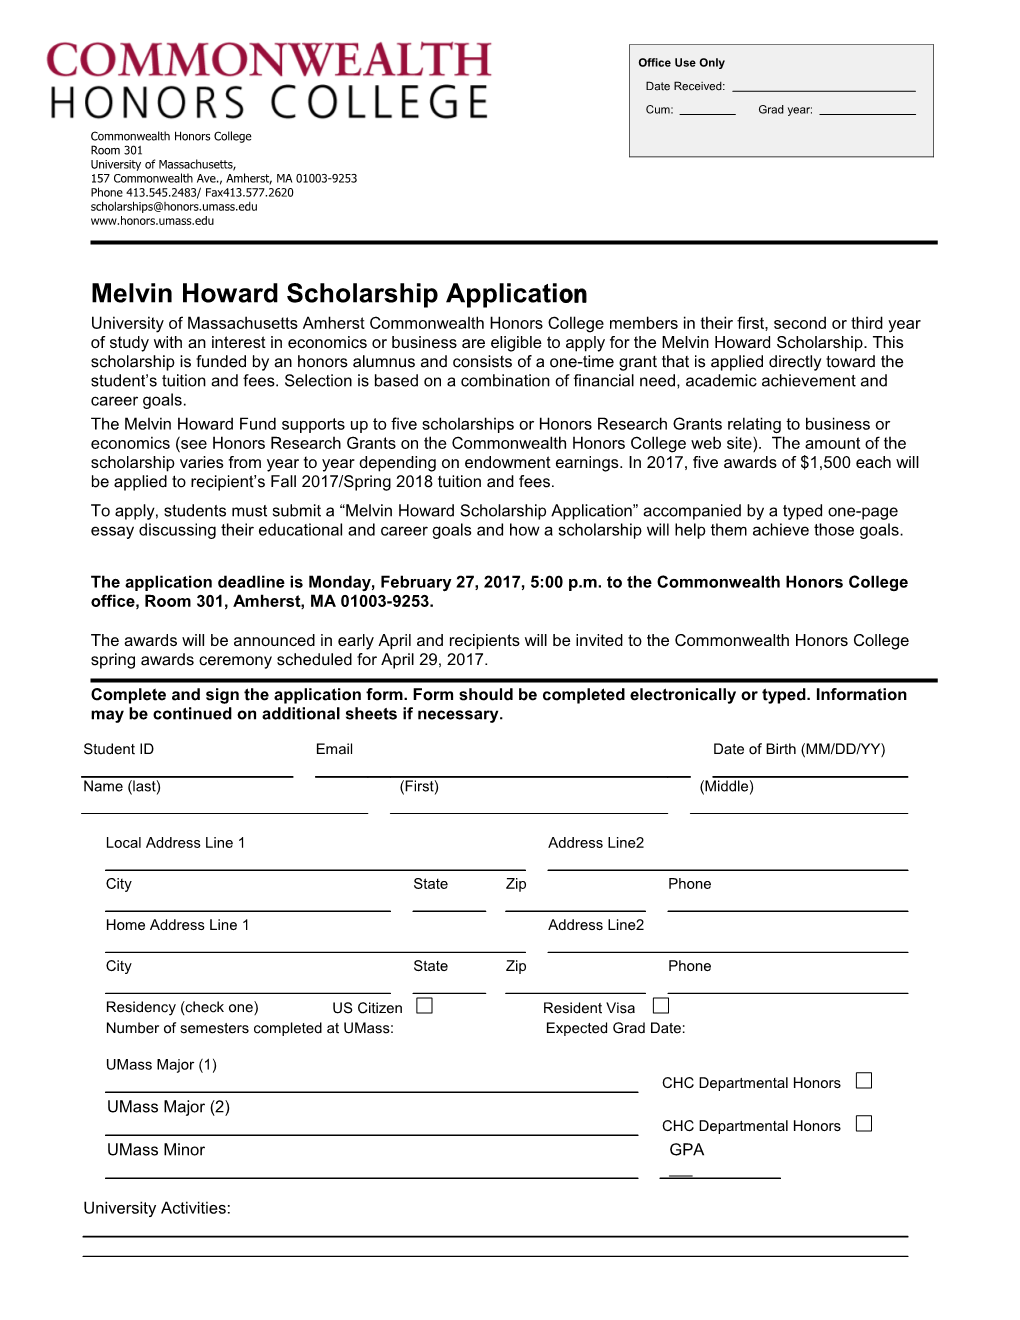 Melvin Howard Scholarship Application